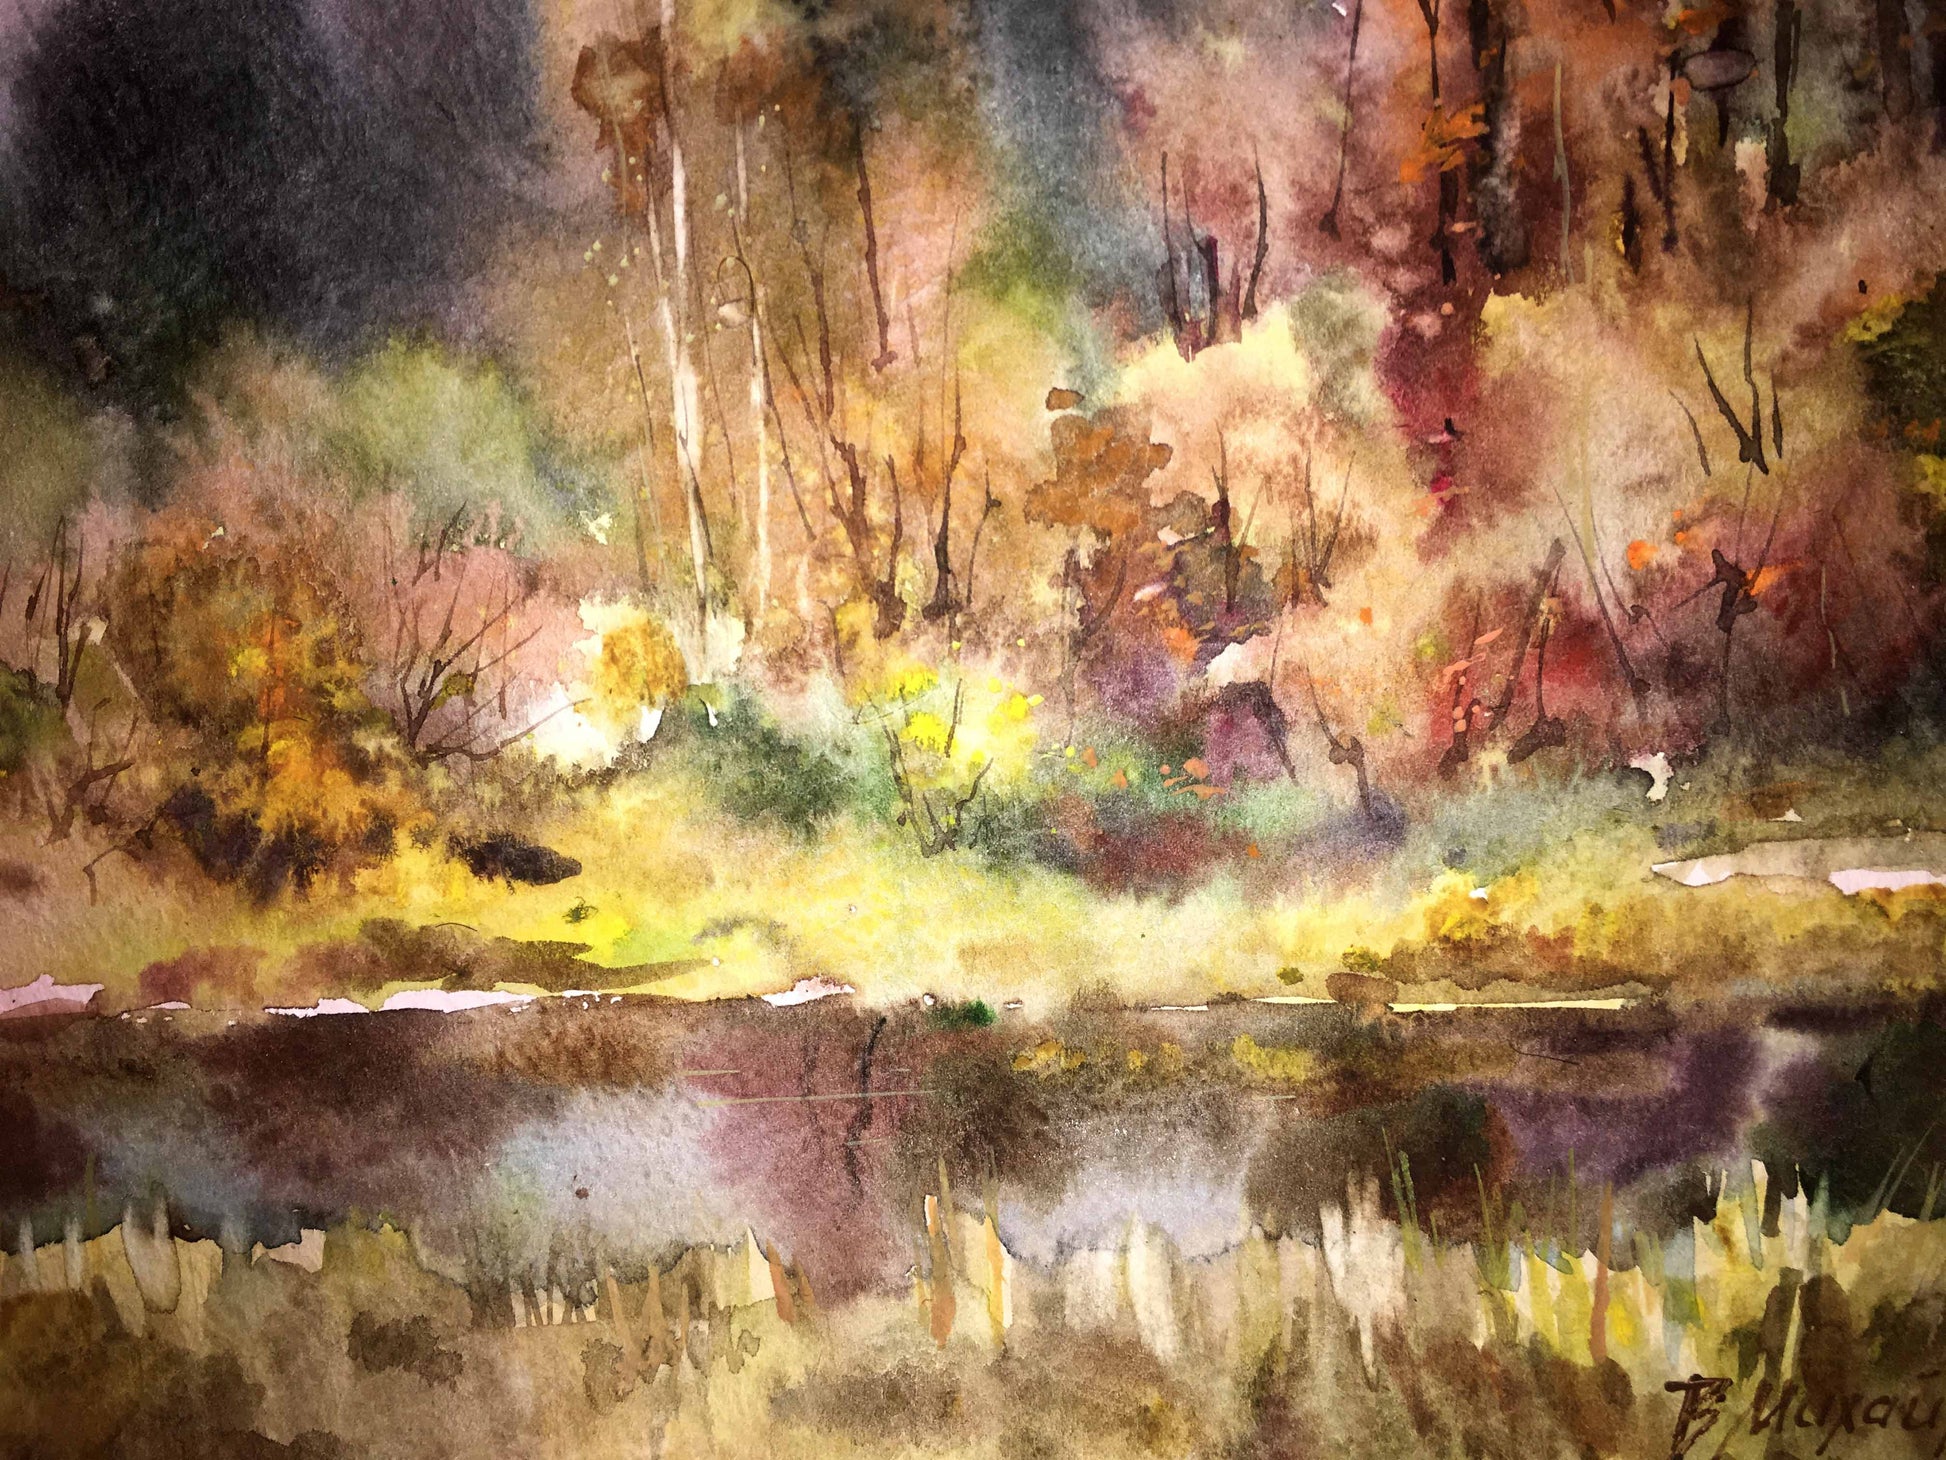 The watercolor piece "Autumn Gold" by Viktor Mikhailichenko